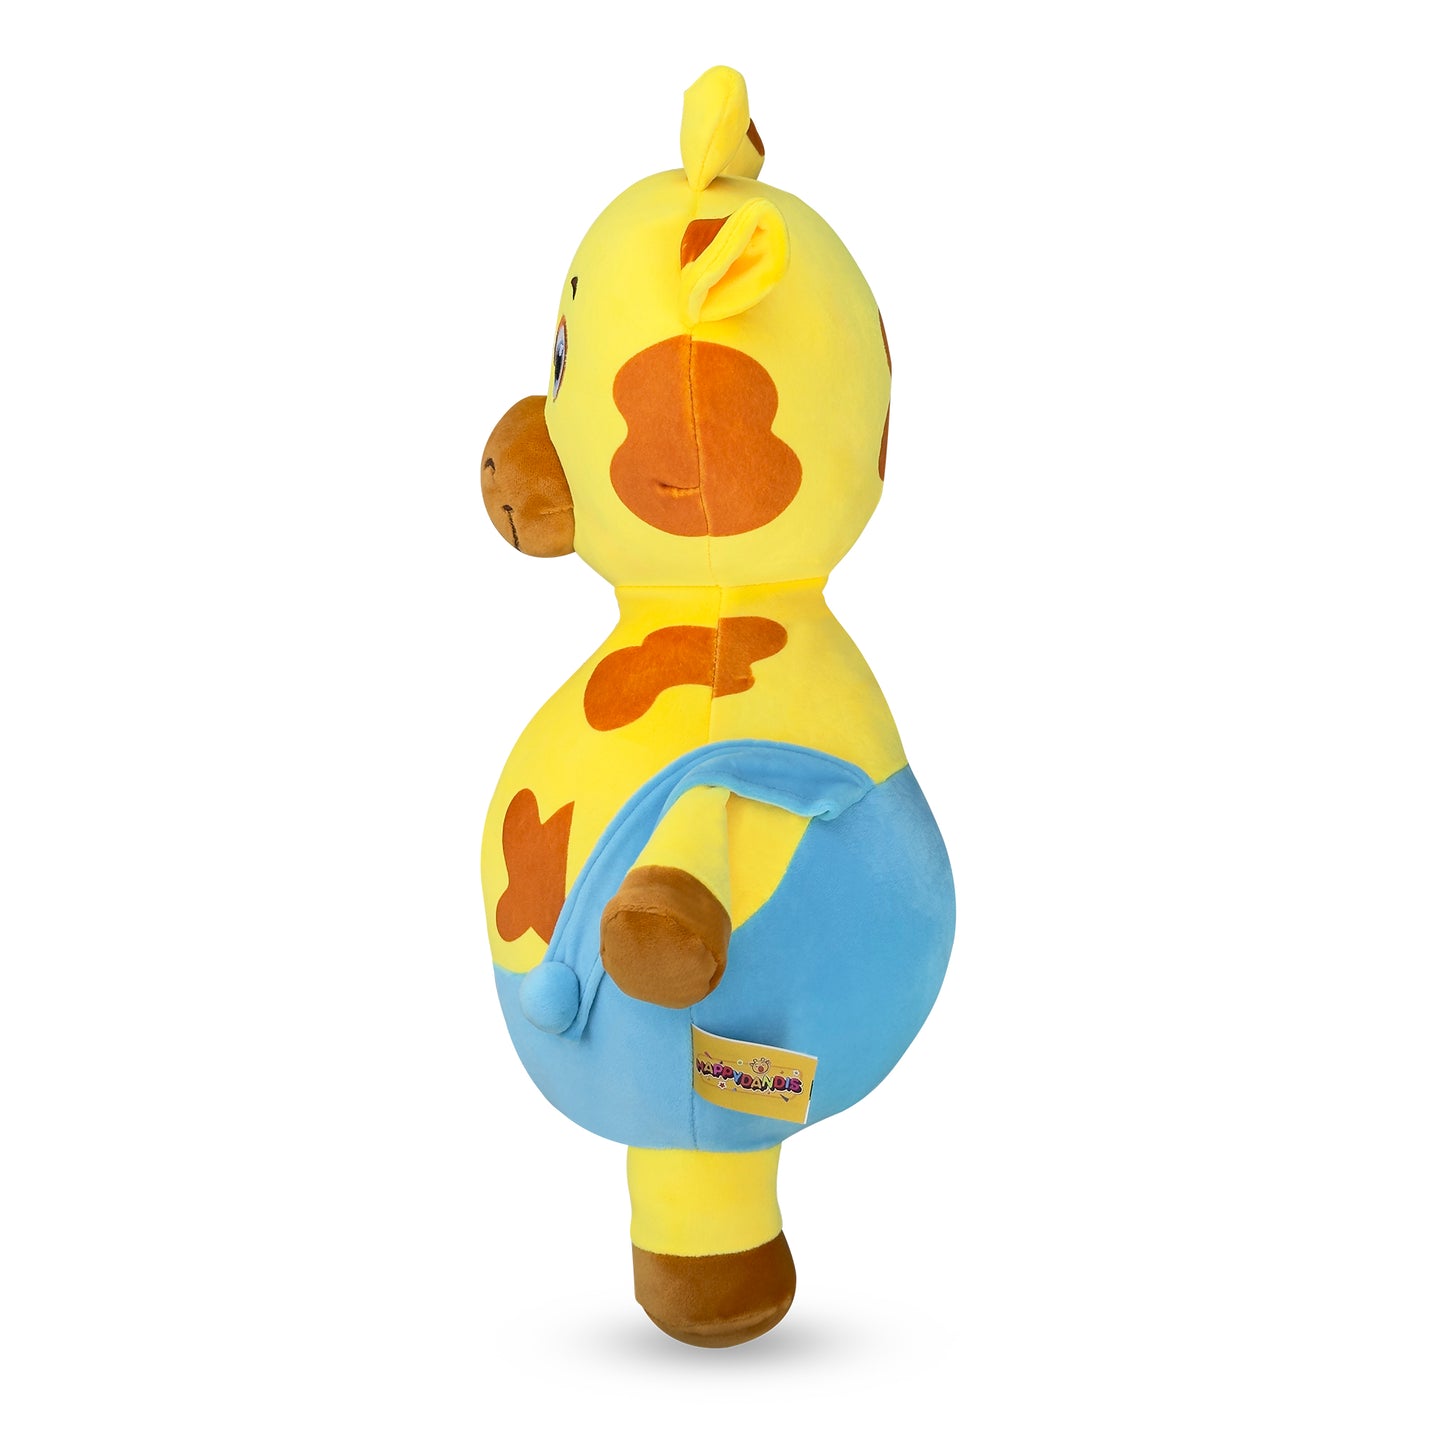 Side view of Happydandis giraffe stuffed animal plush toy